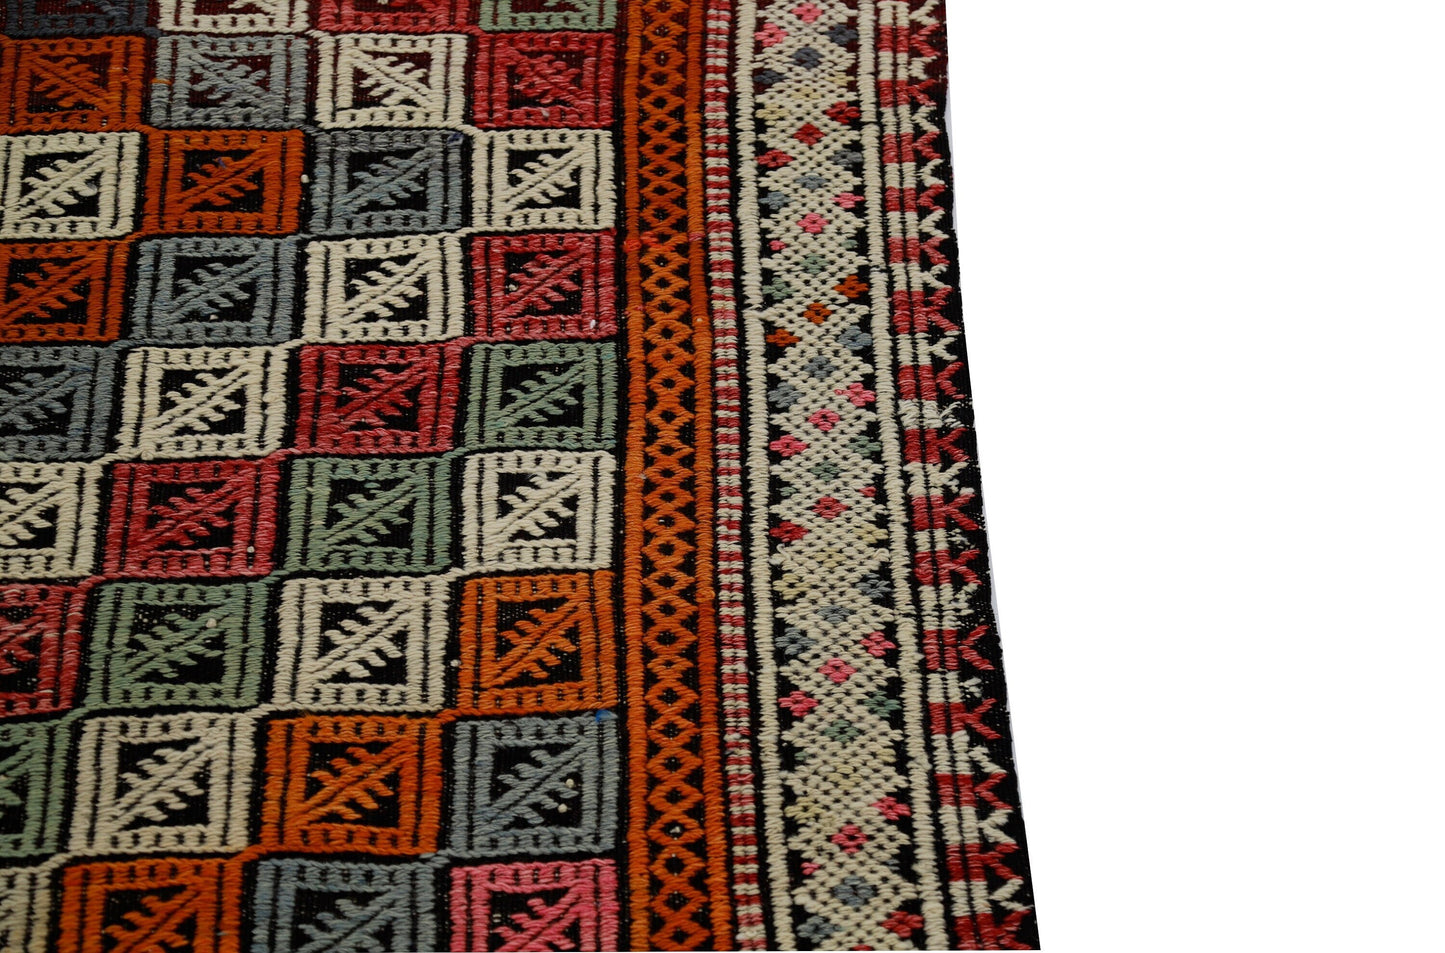 5x7 Area Kilim Rug, Handmade Kilim Rug, Vintage Kilim Rug, Turkish Kilim Rug, Farmhouse Decor, Country Decor, Living Room Rug, 2875